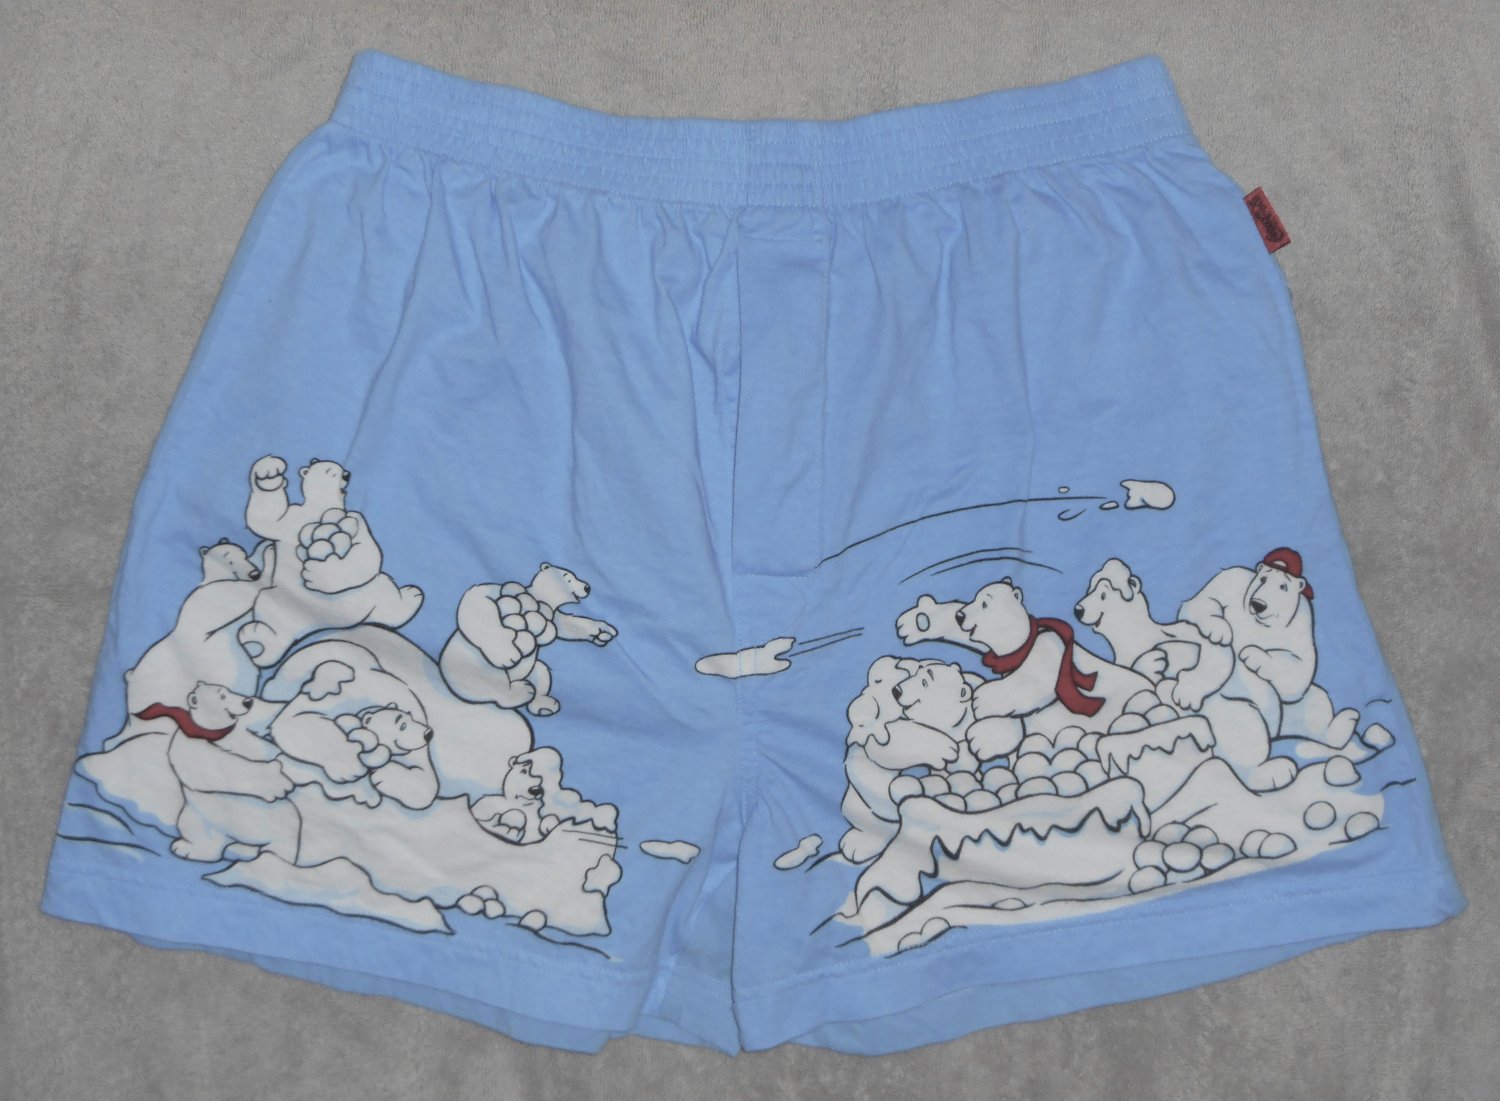 Coca Cola Coke Boxer Shorts Size Small S Polar Bears Snowball Fight Underwear Never Worn 2001